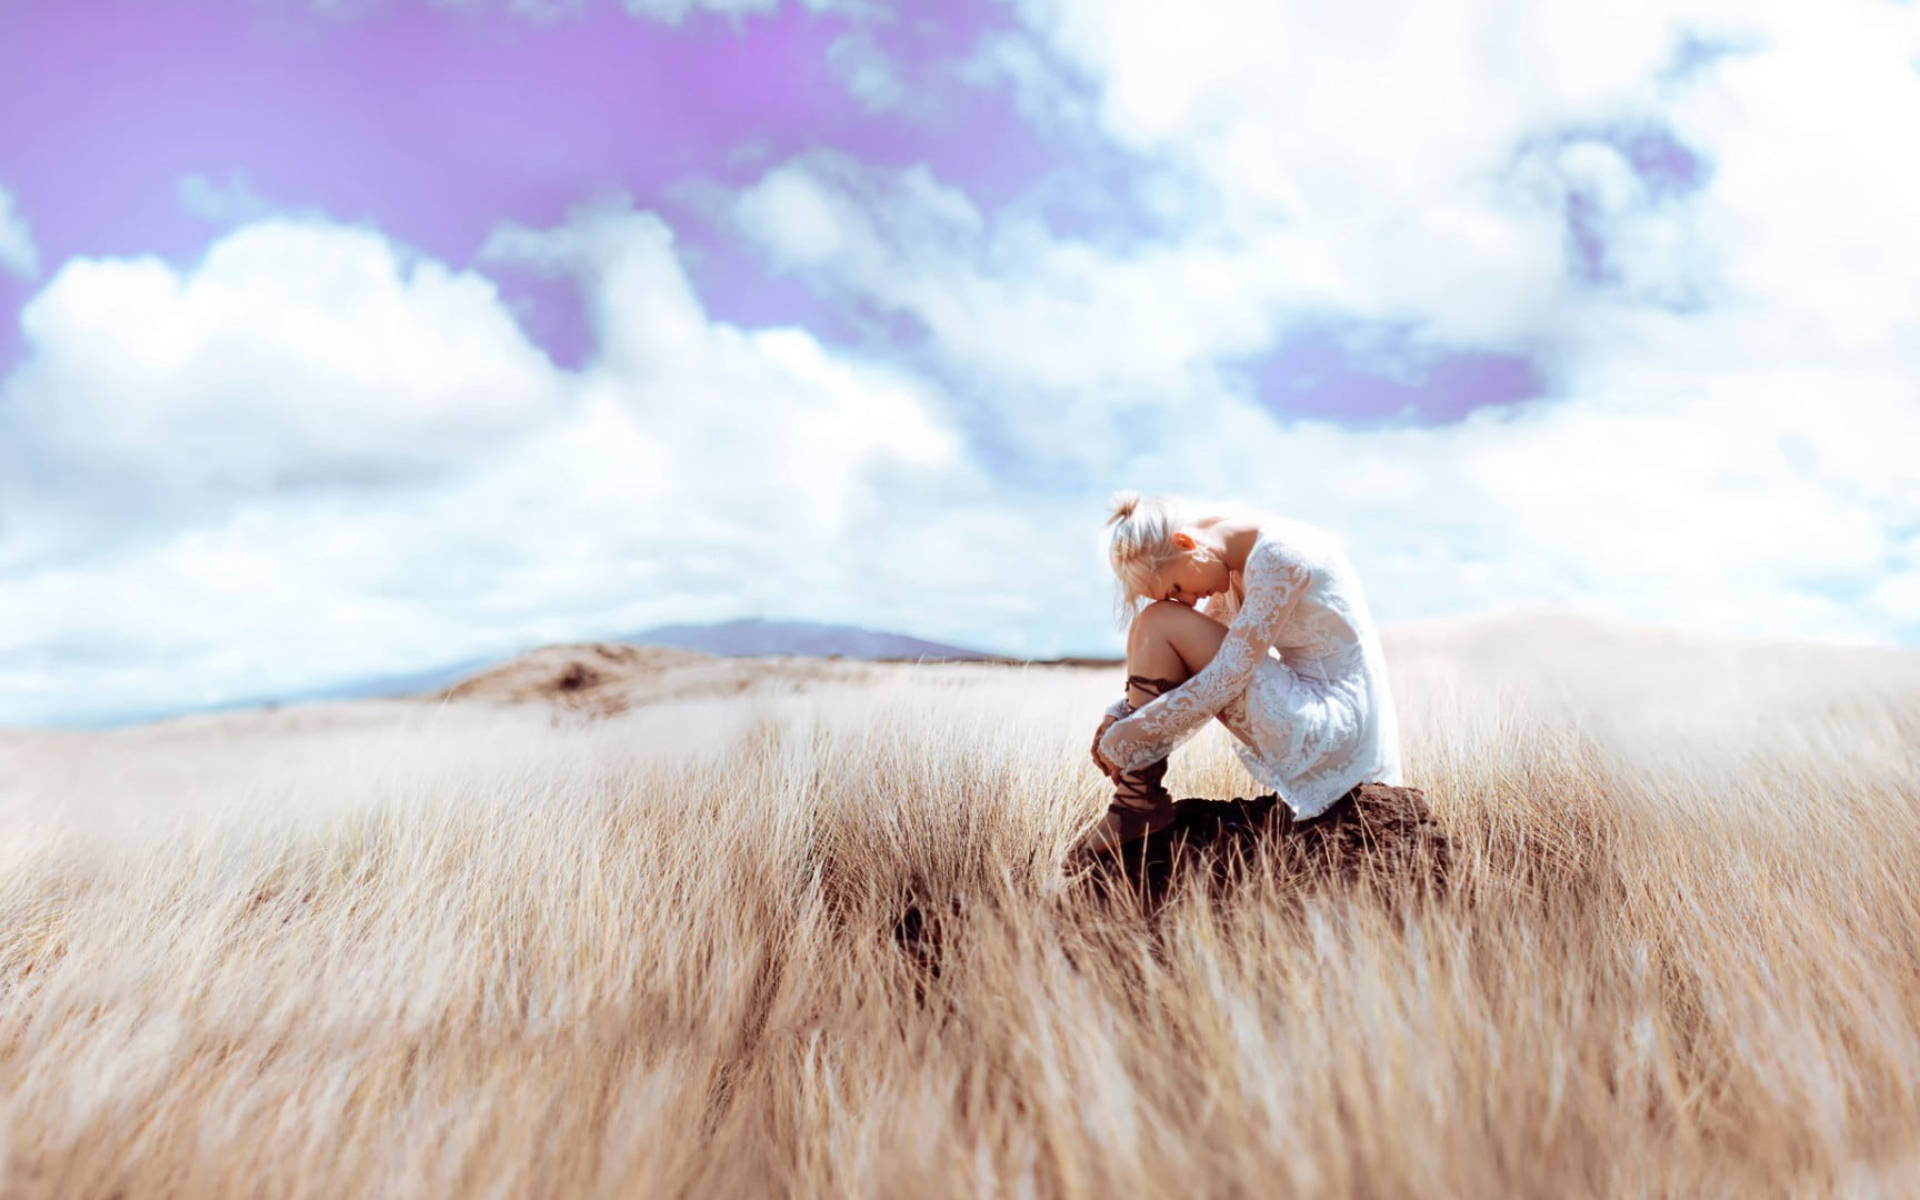 Sad Girl Alone In Grass Field Background